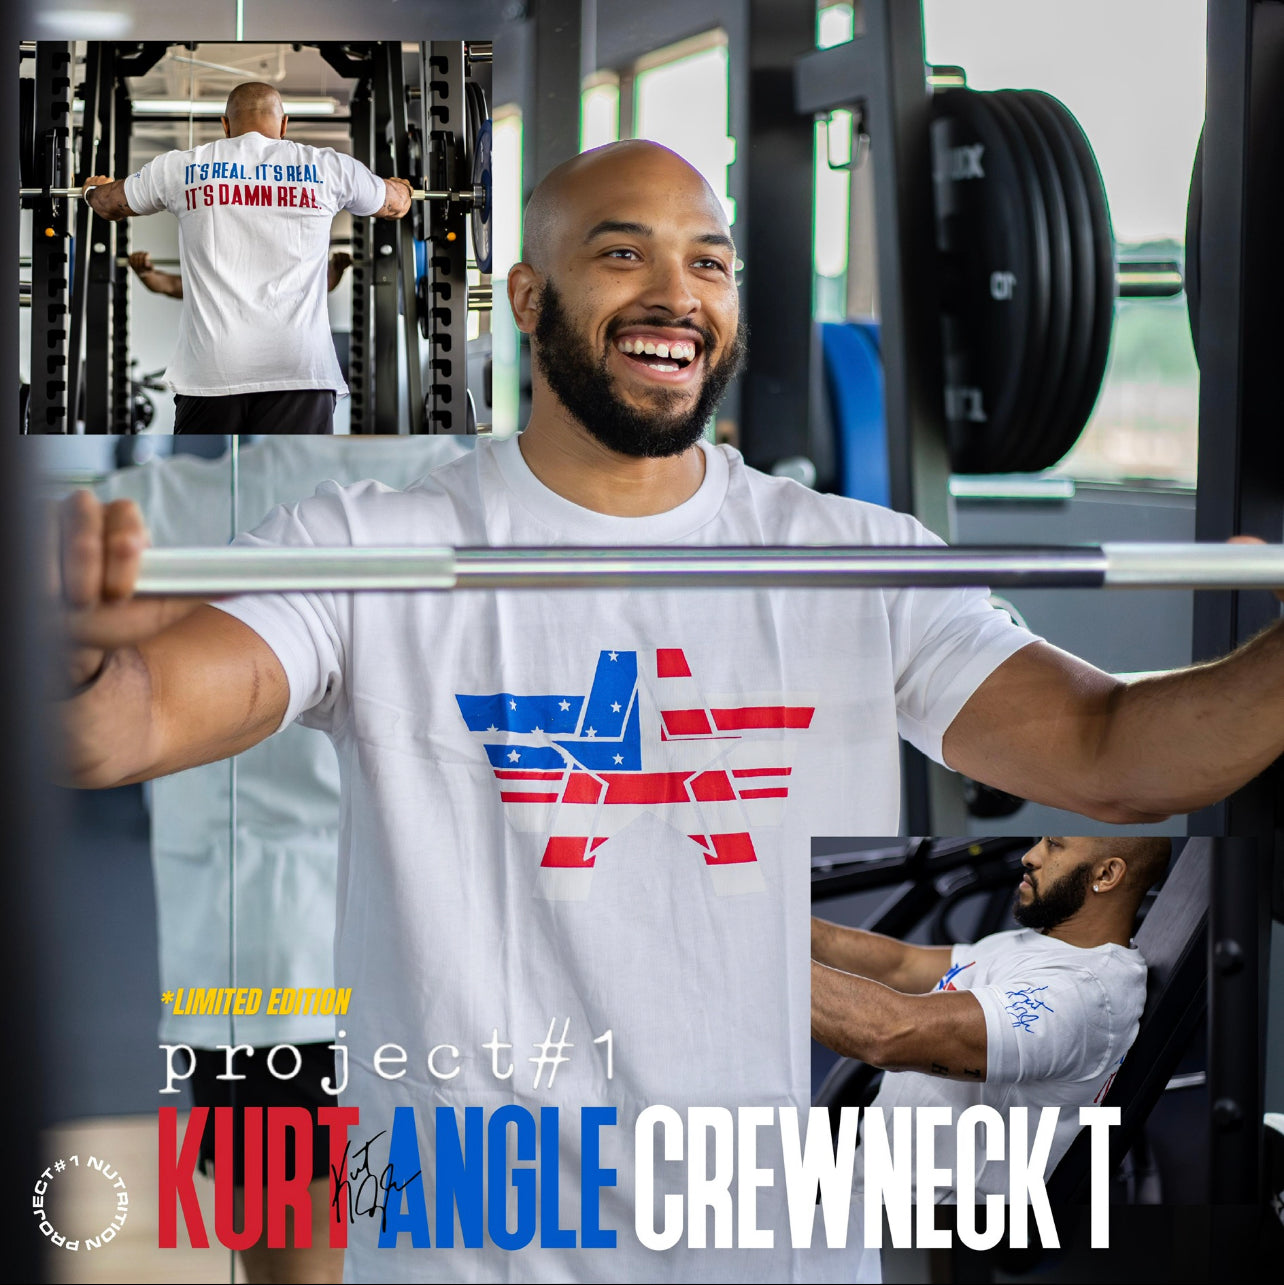 Project#1 American Dream Shirt - Kurt Angle